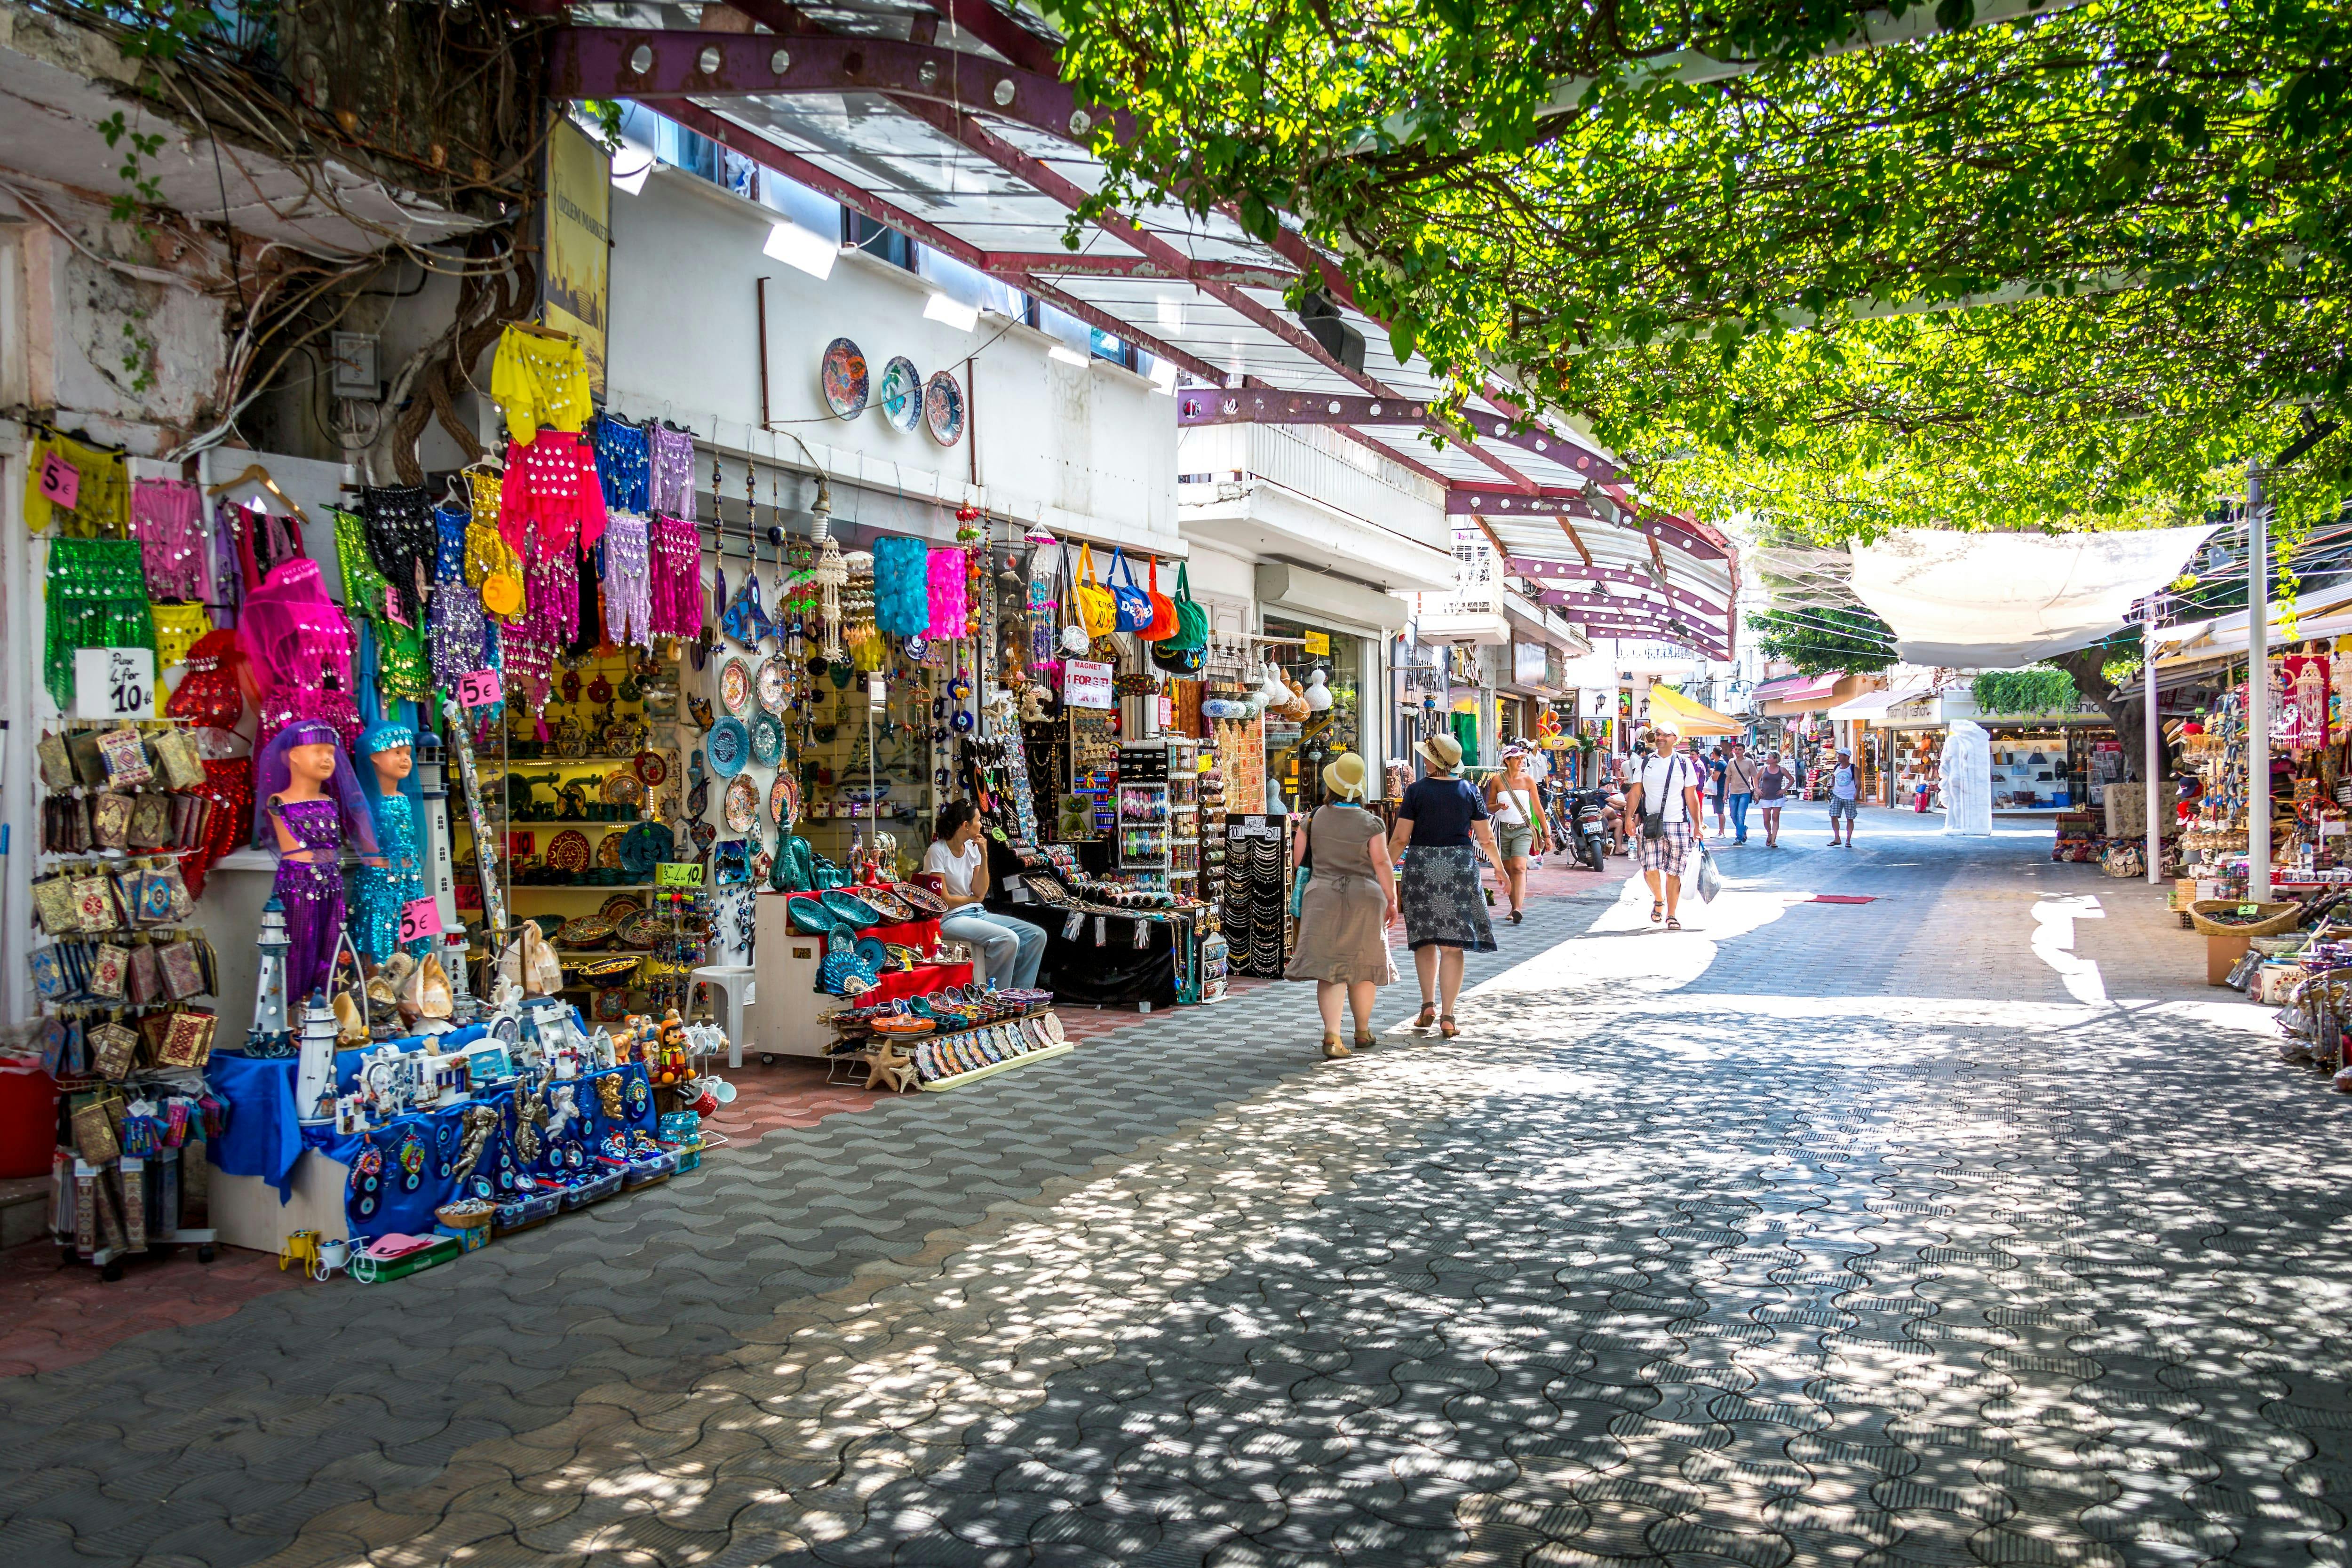 Shopping Day in Marmaris - Marmaris Turkey